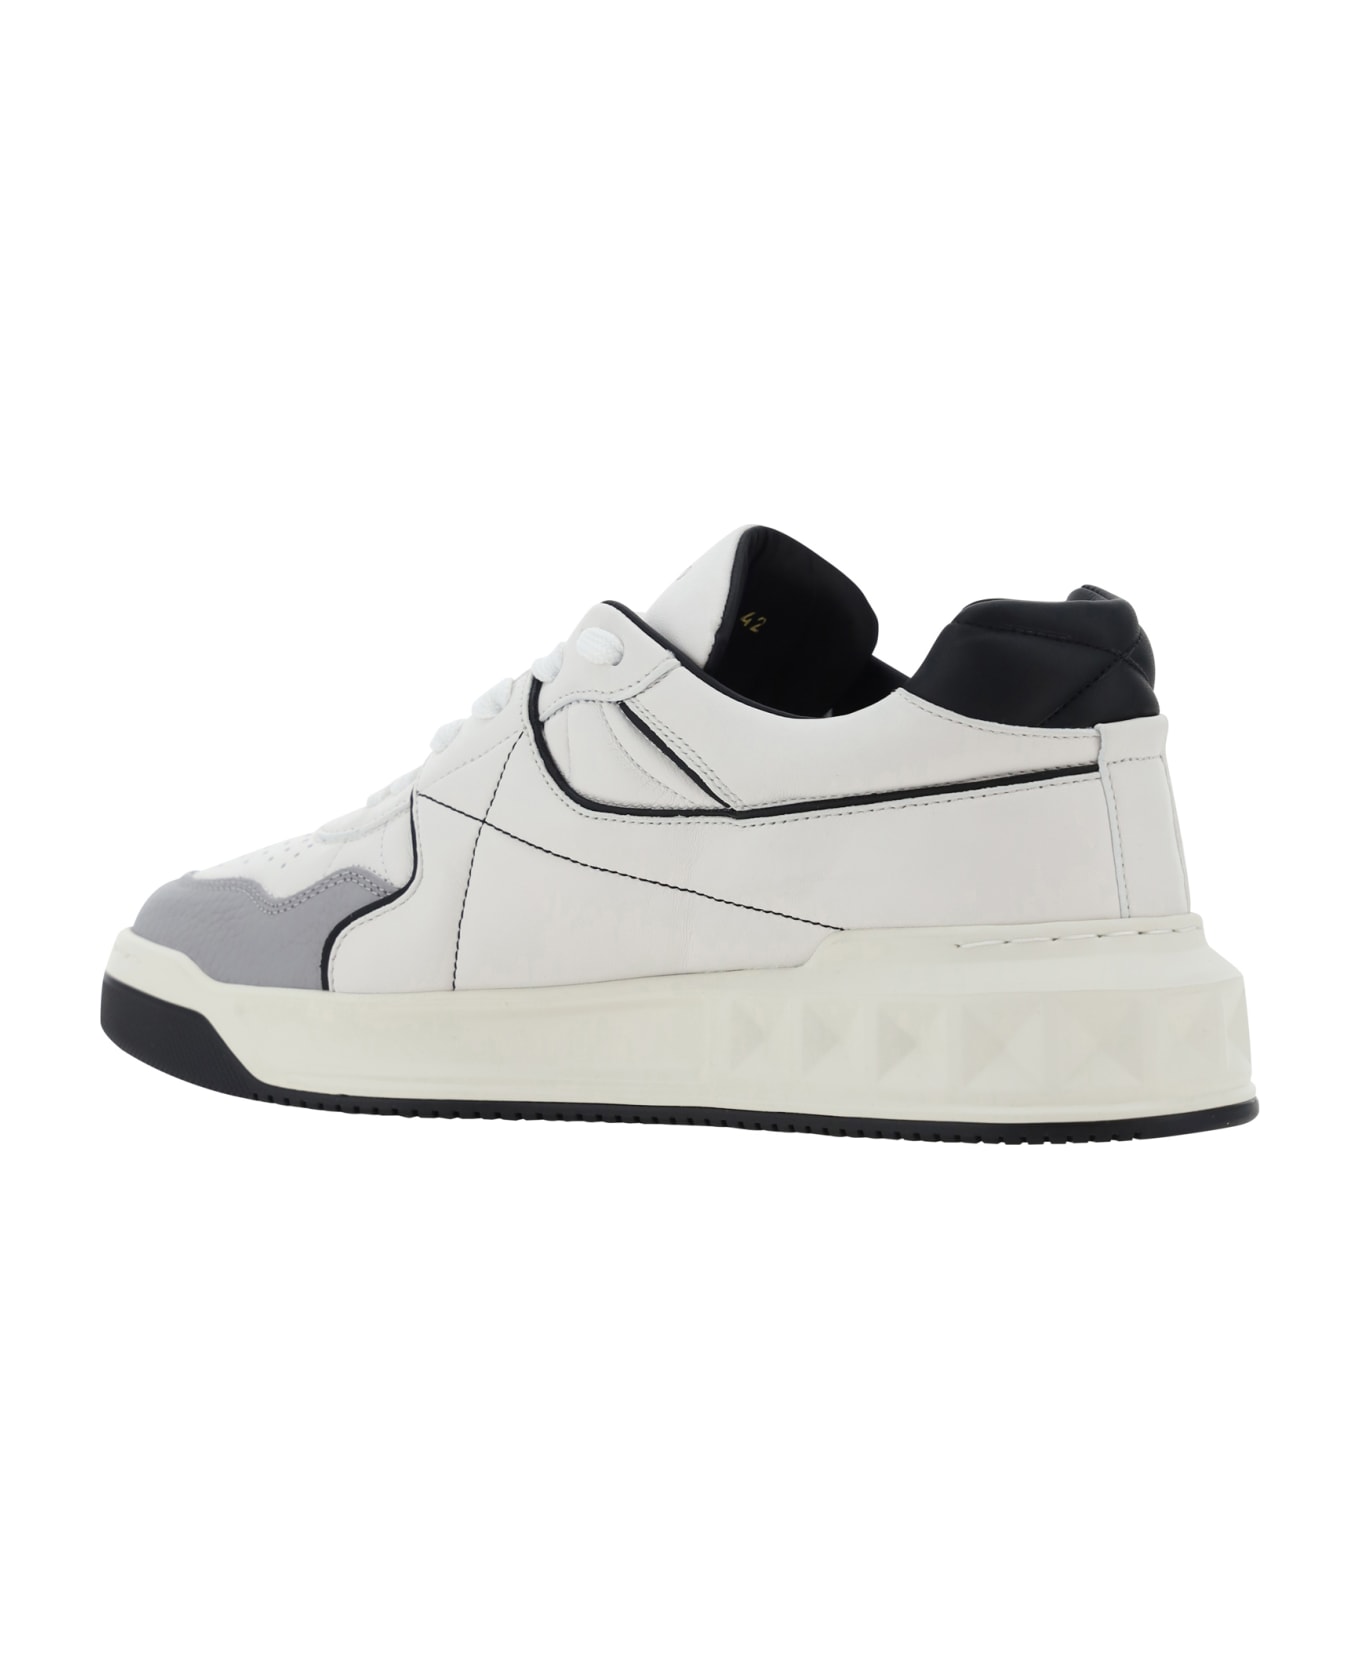 Valentino Garavani One Stud Sneakers - Bianco-nero/pastel Grey/nero/bianco